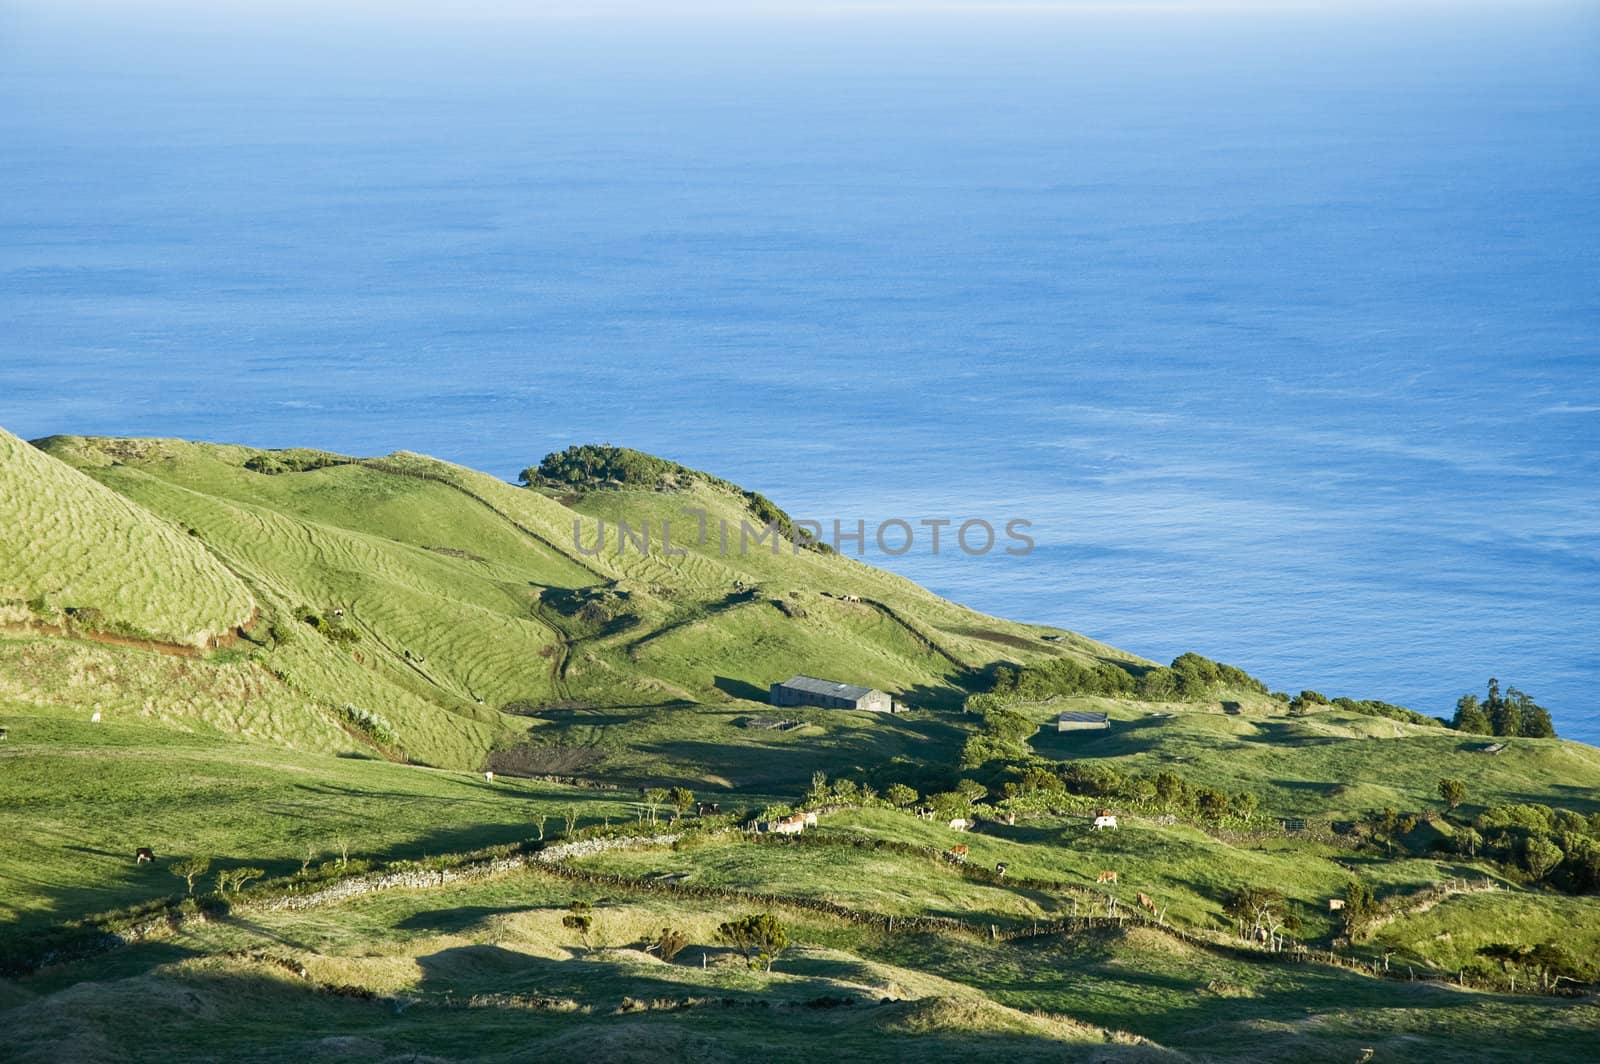 Pasture landscape of Pico island, Azores by mrfotos